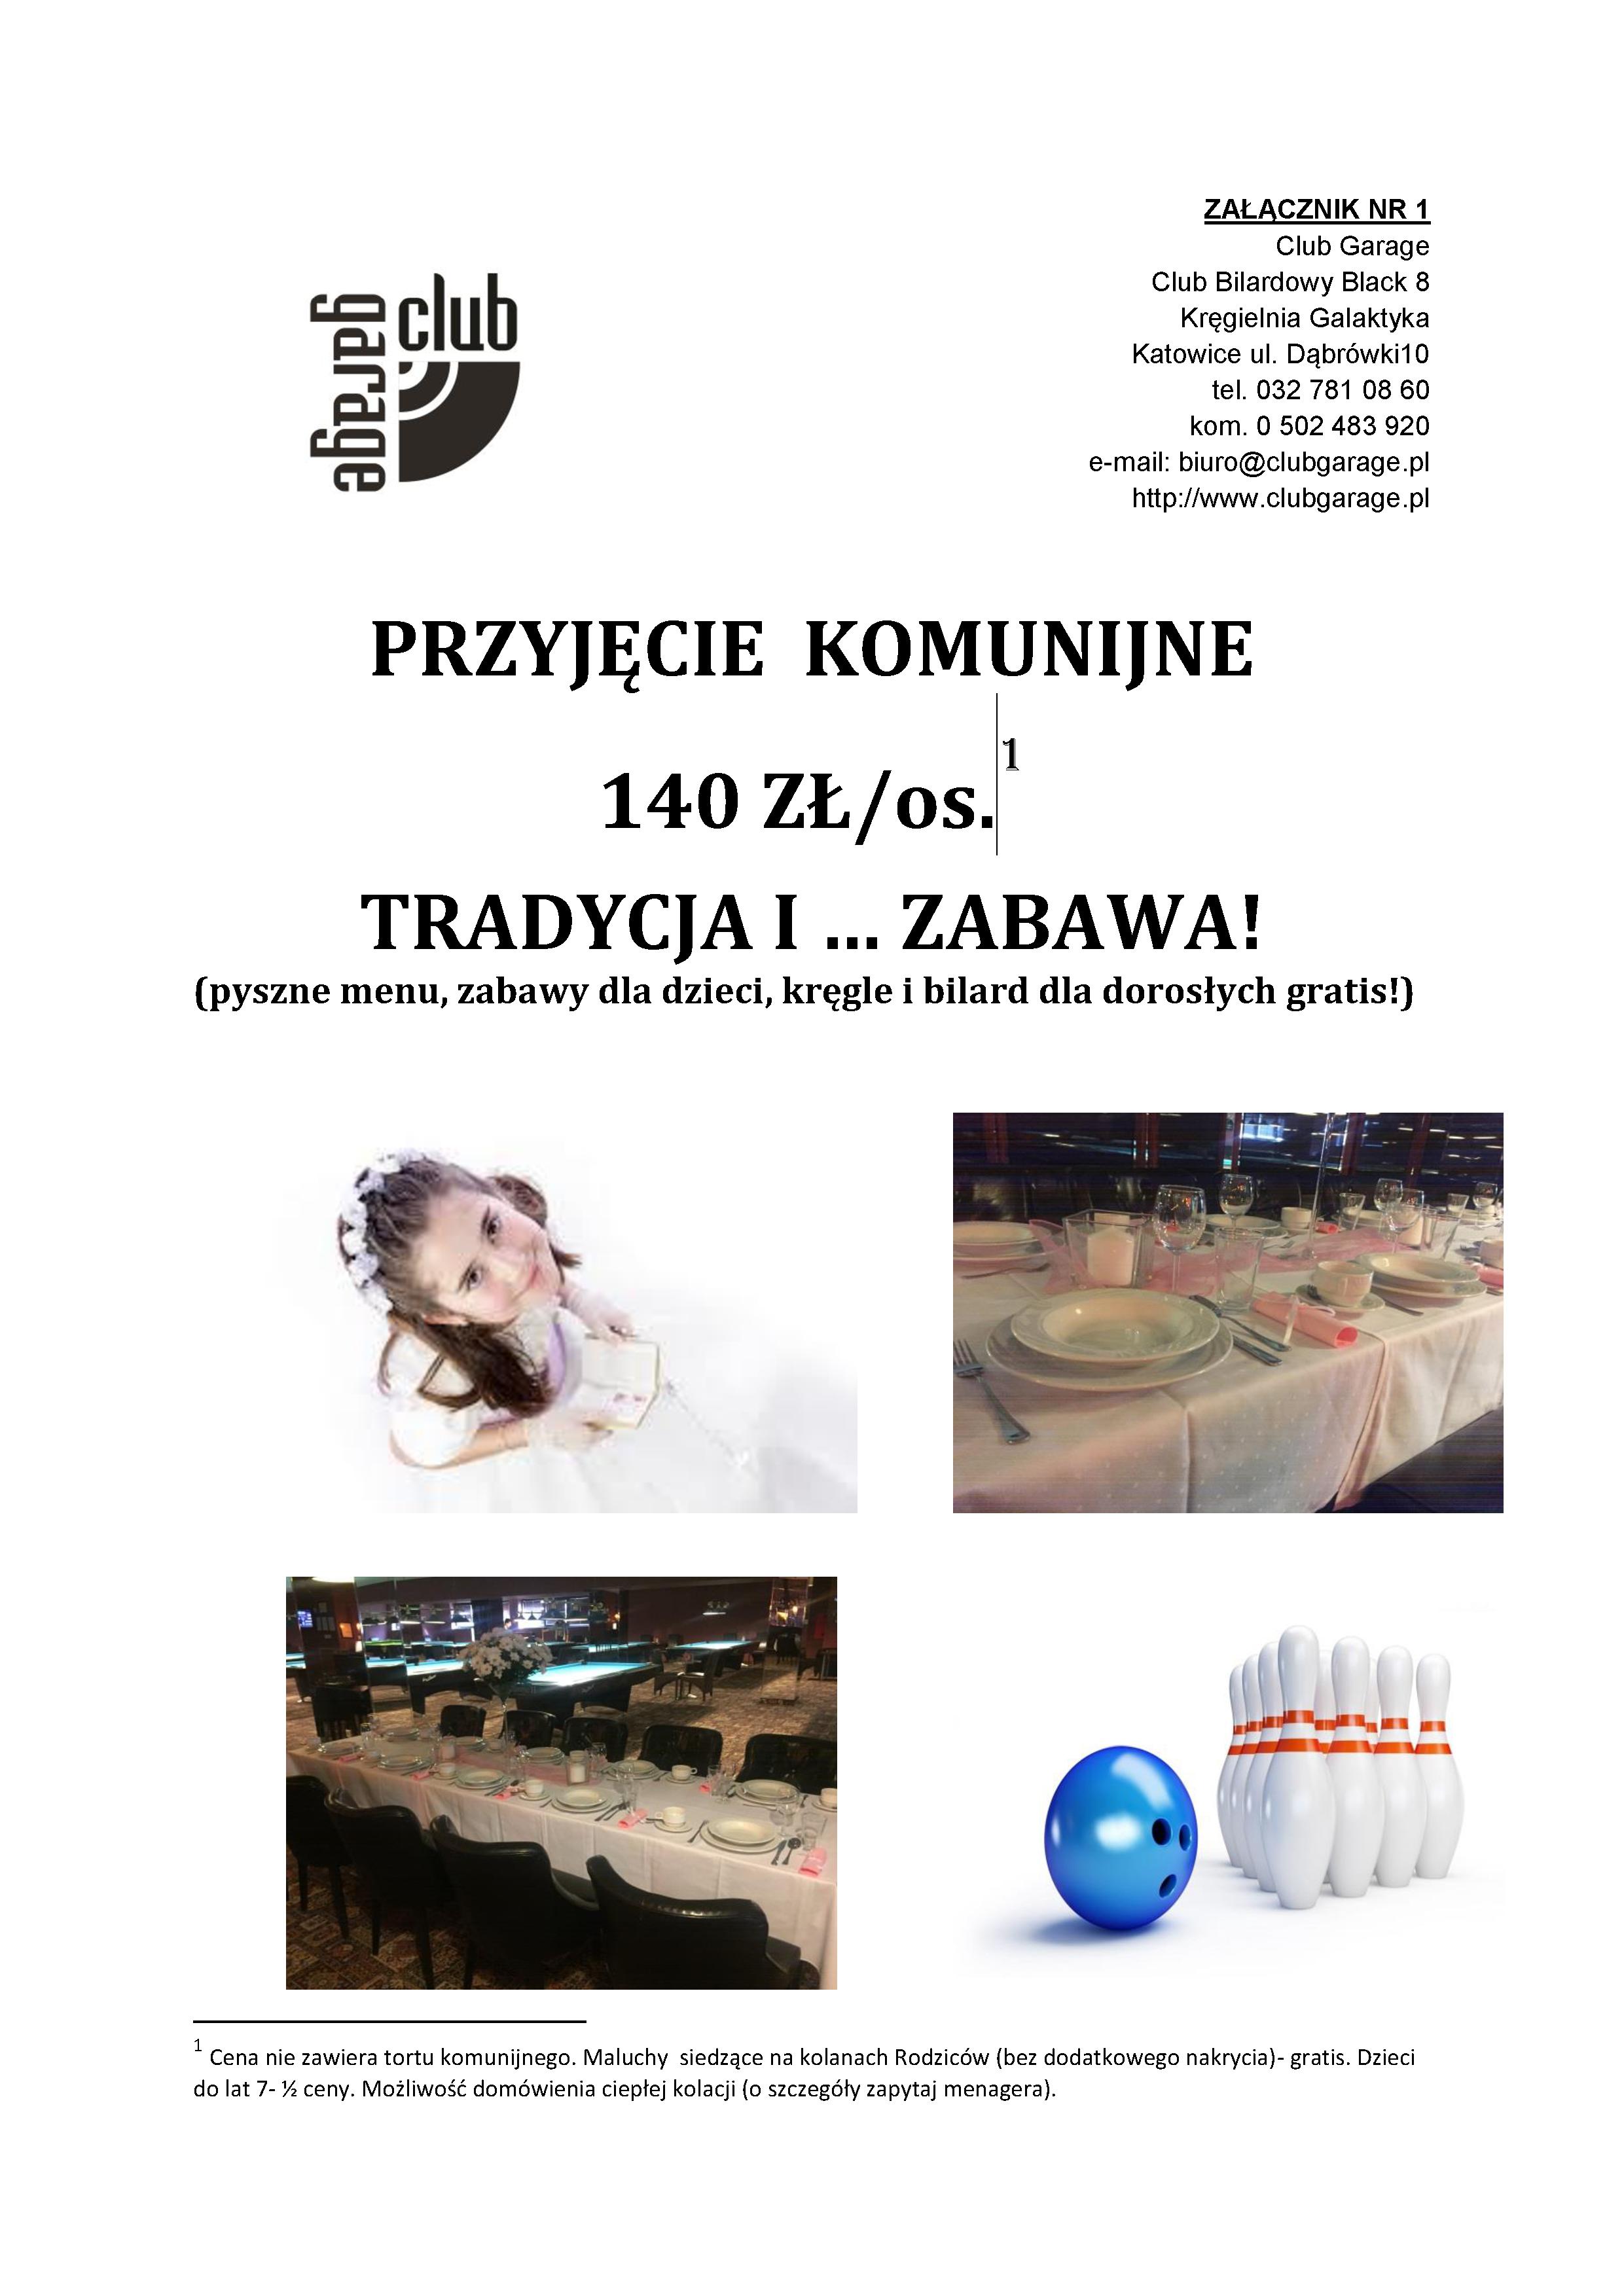 Komunia w Katowicach.jpg 2